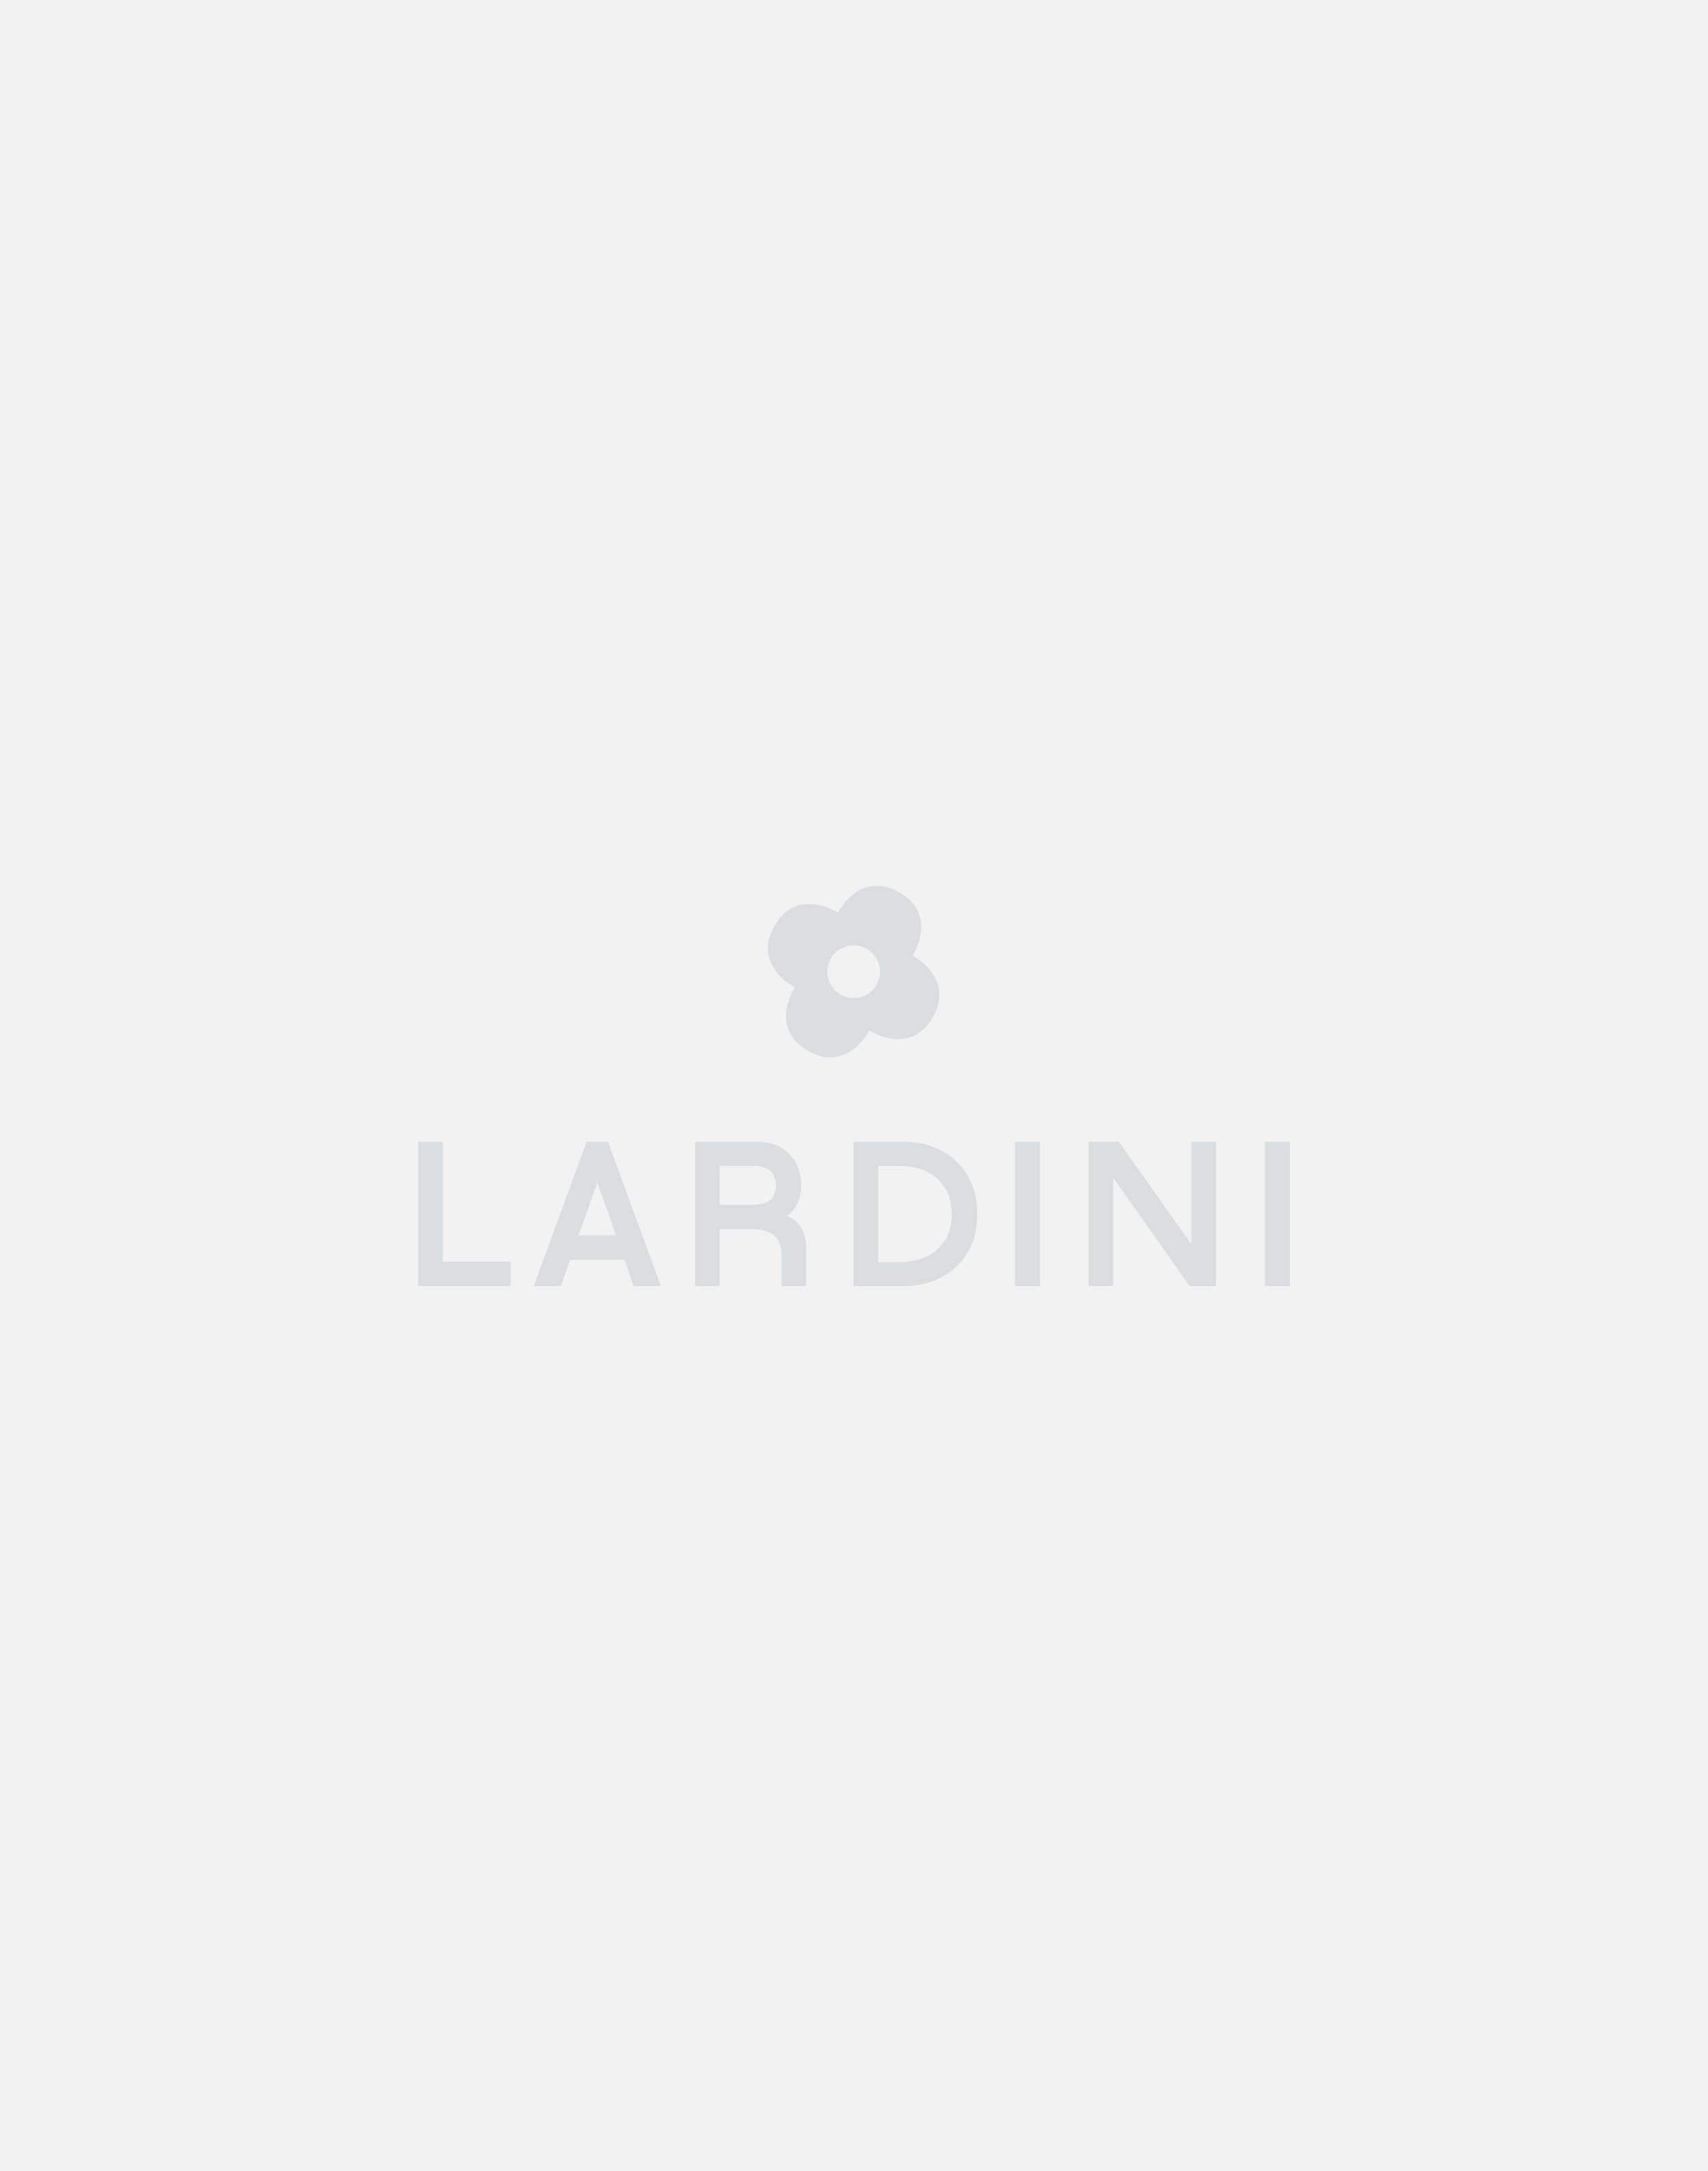 Scarf with geometric pattern - Luigi Lardini capsule 2